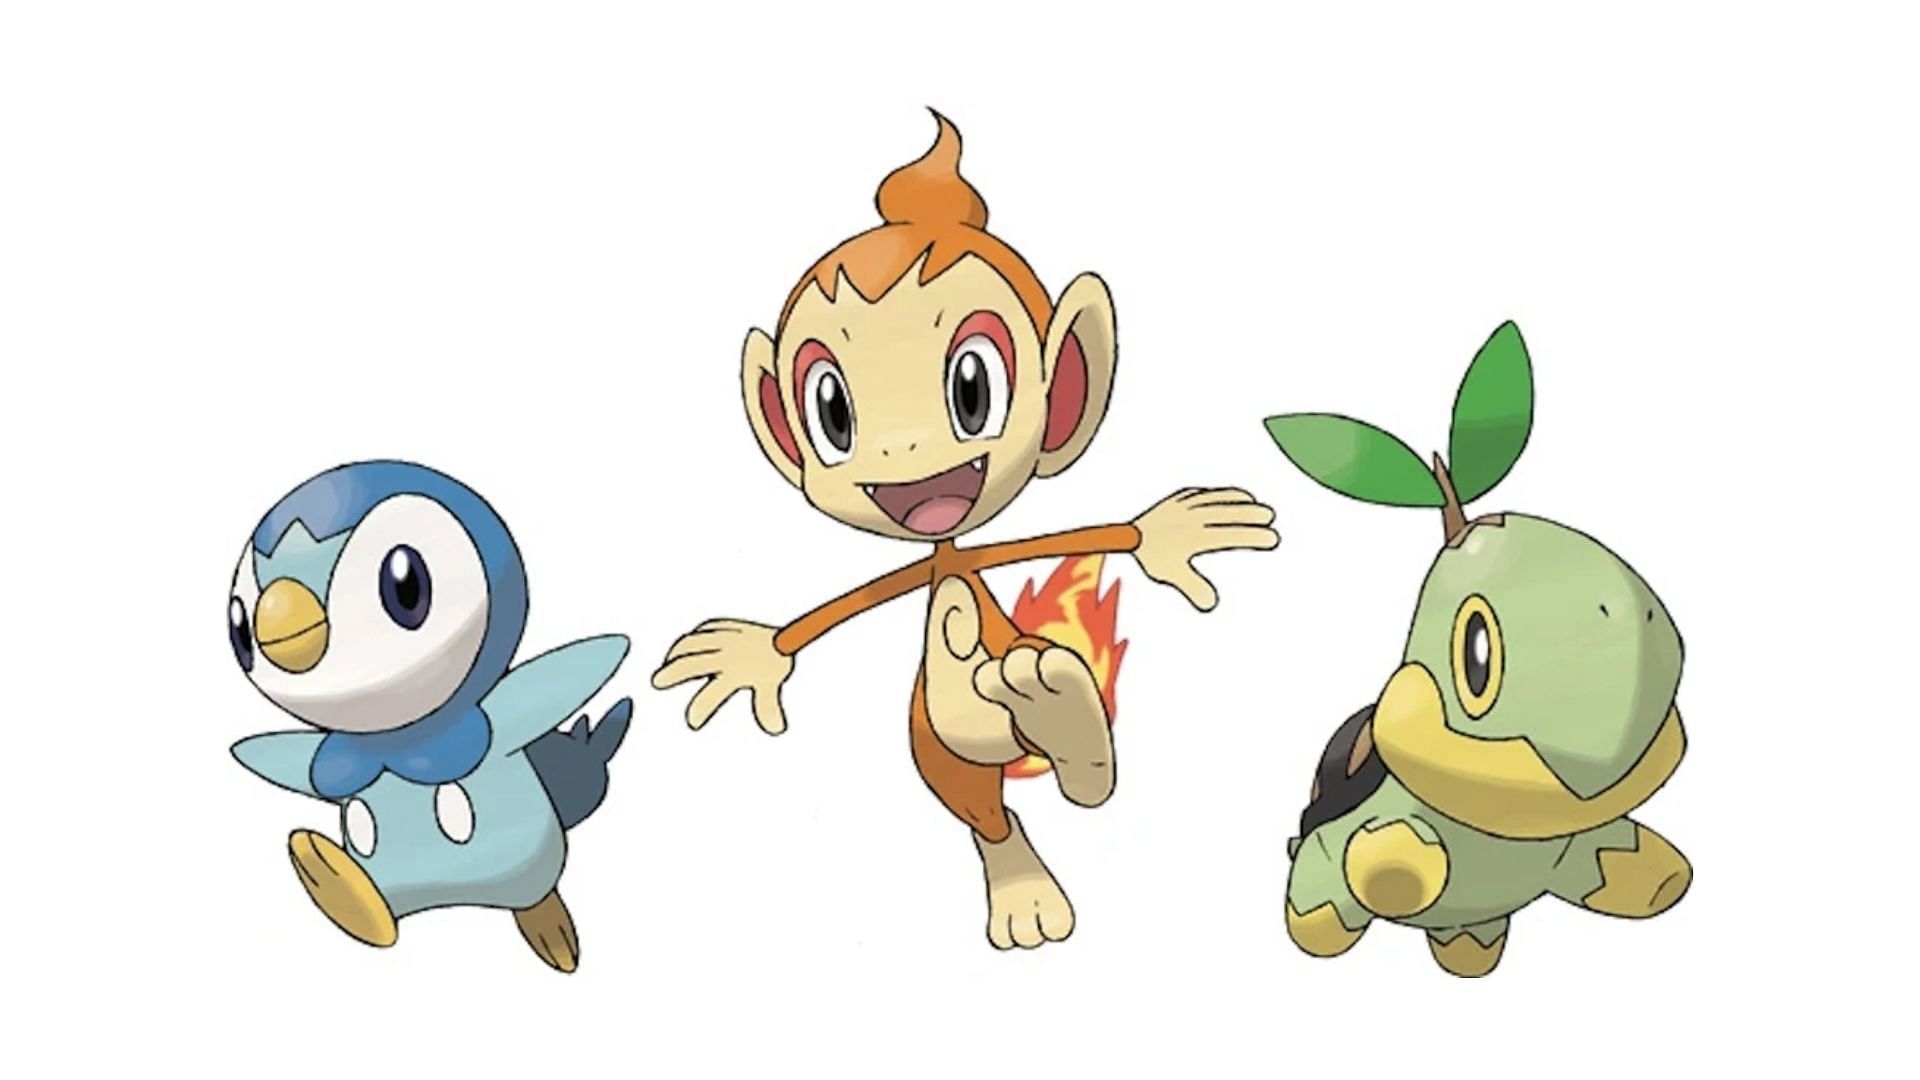 Sinnoh starters in Tour Sinnoh (image via The Pokemon Company)